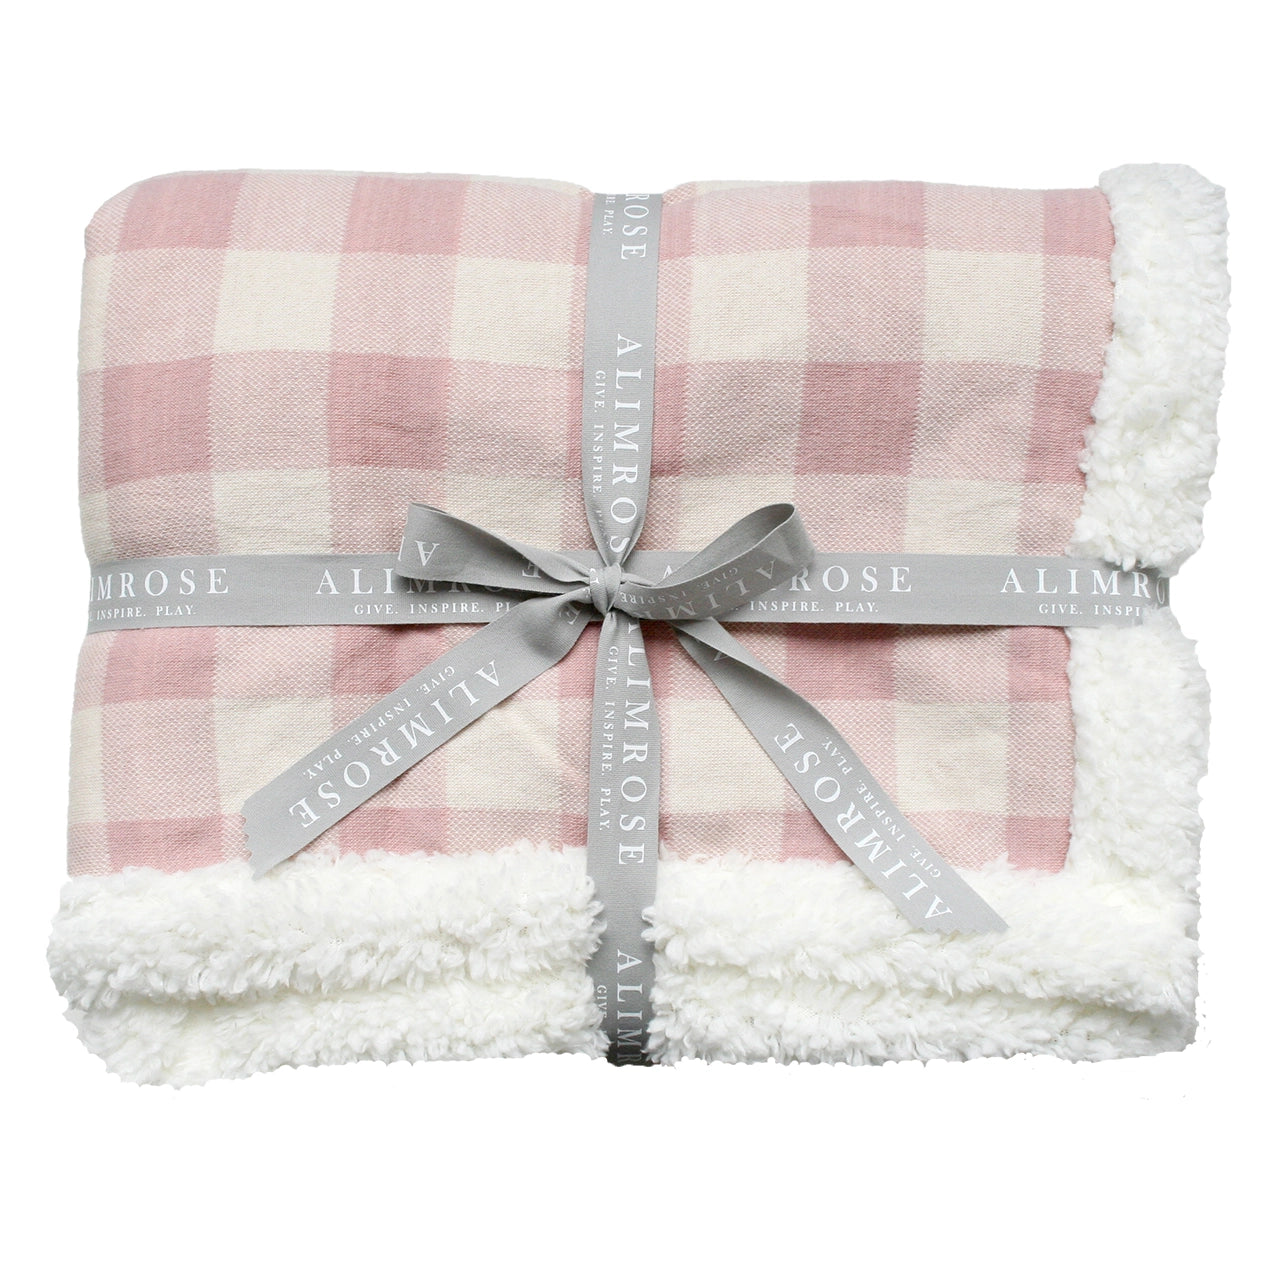 Alimrose Sherpa Baby Blanket 80 x 100cm Pink Check